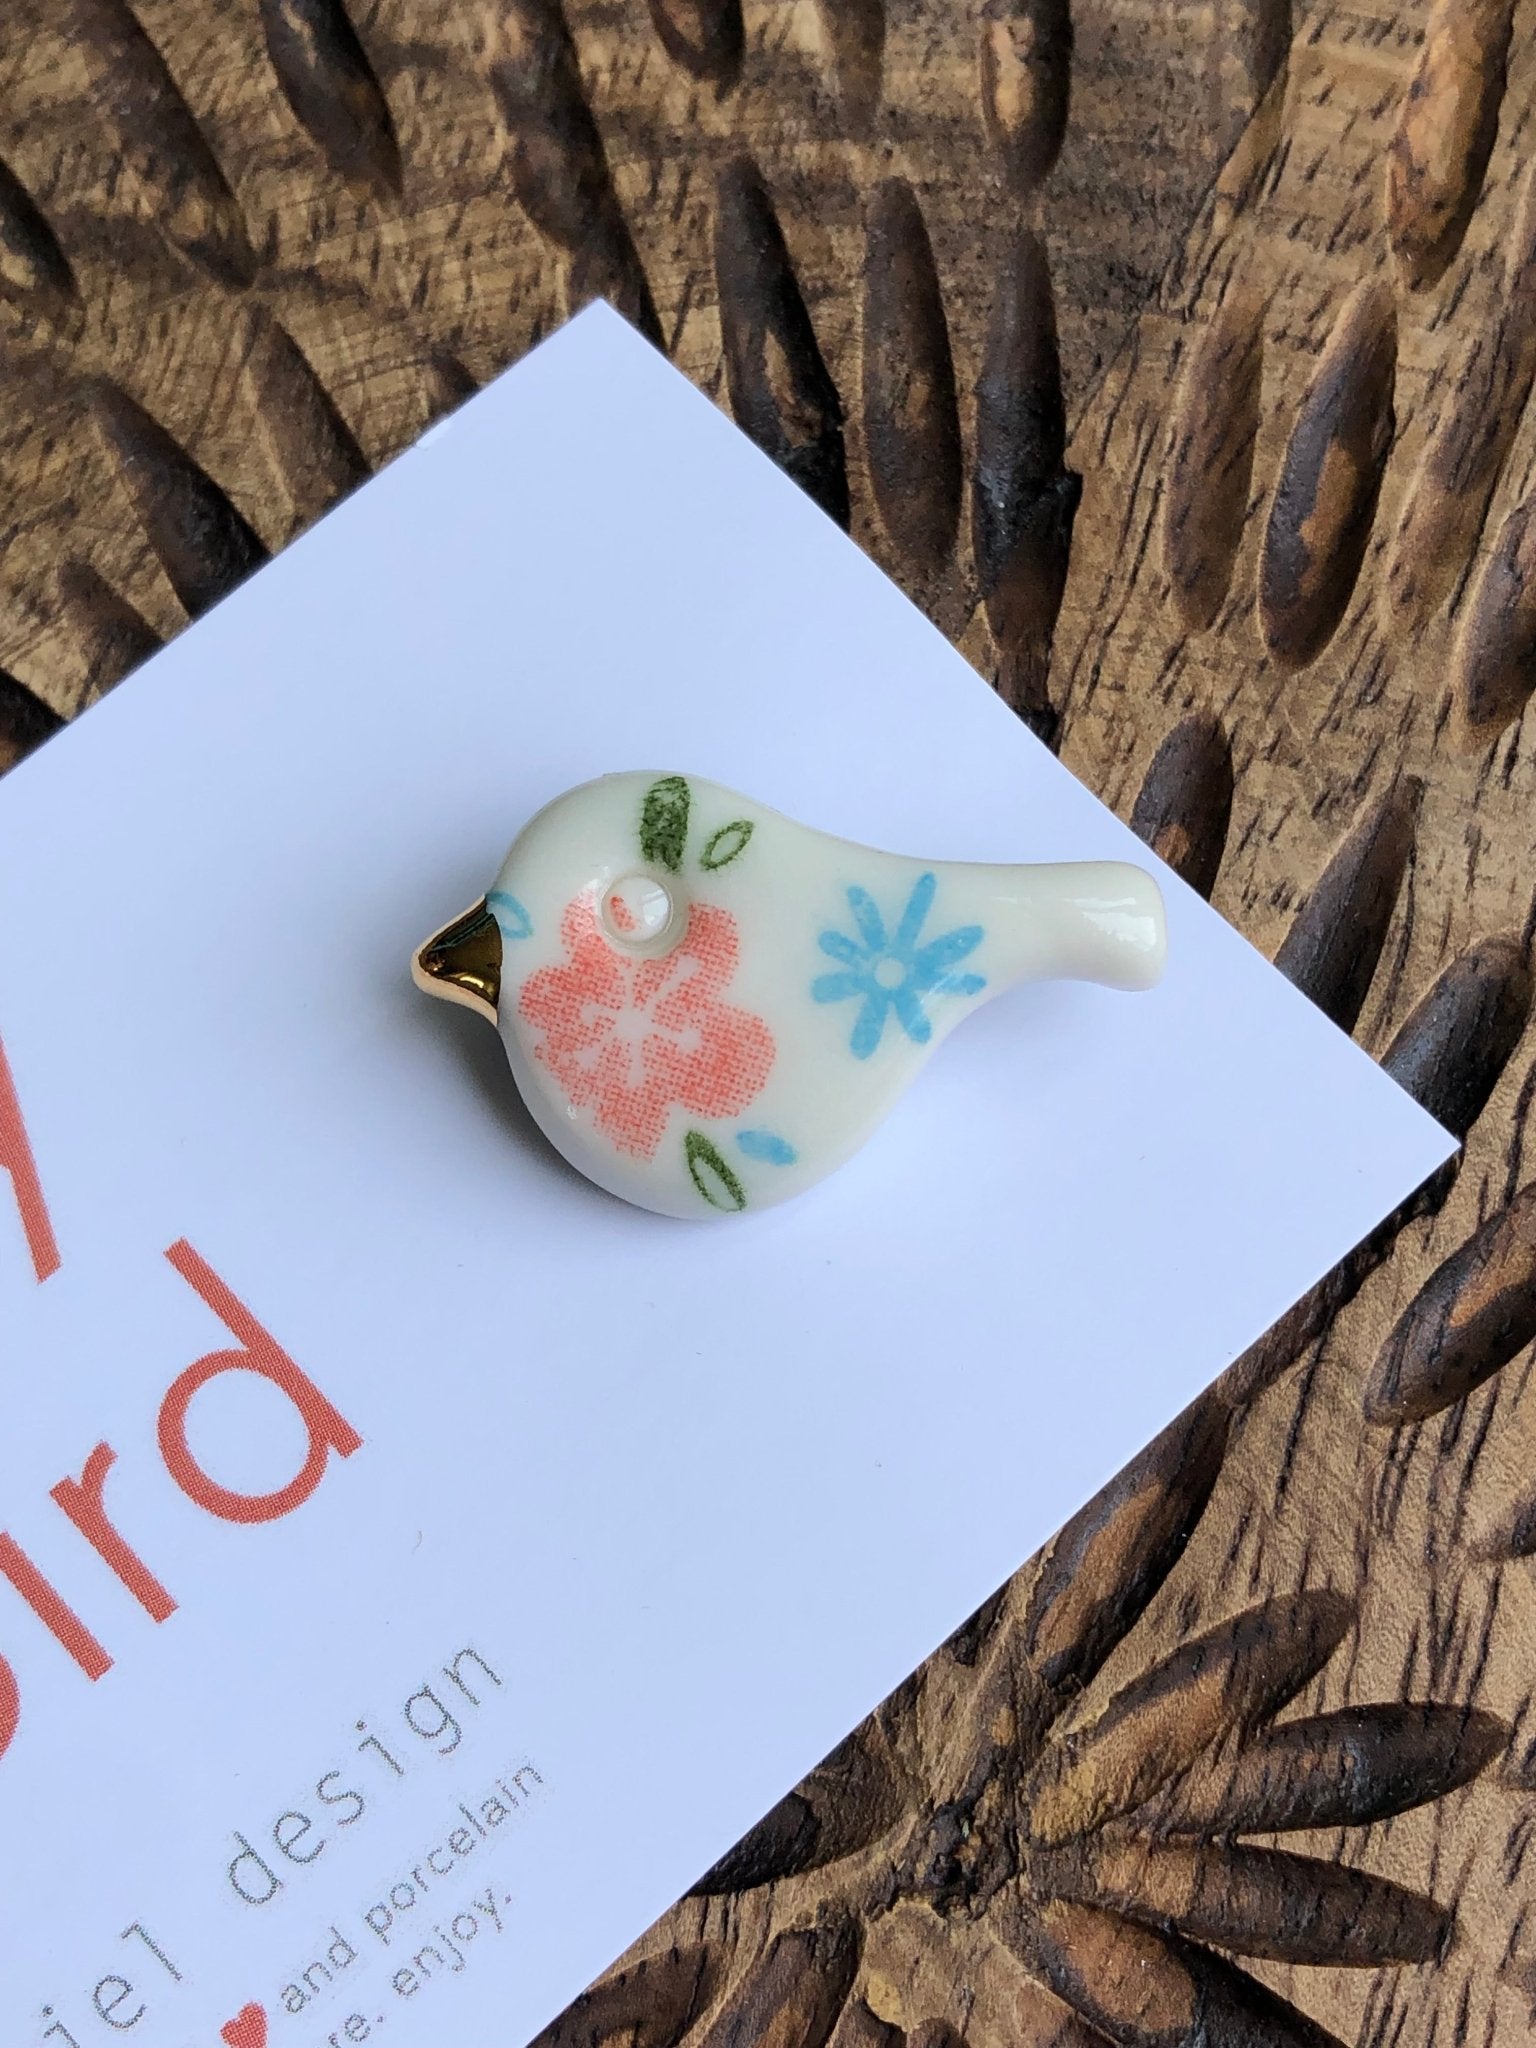 Lucky Bird - SPRING 10 - hart&ziel design